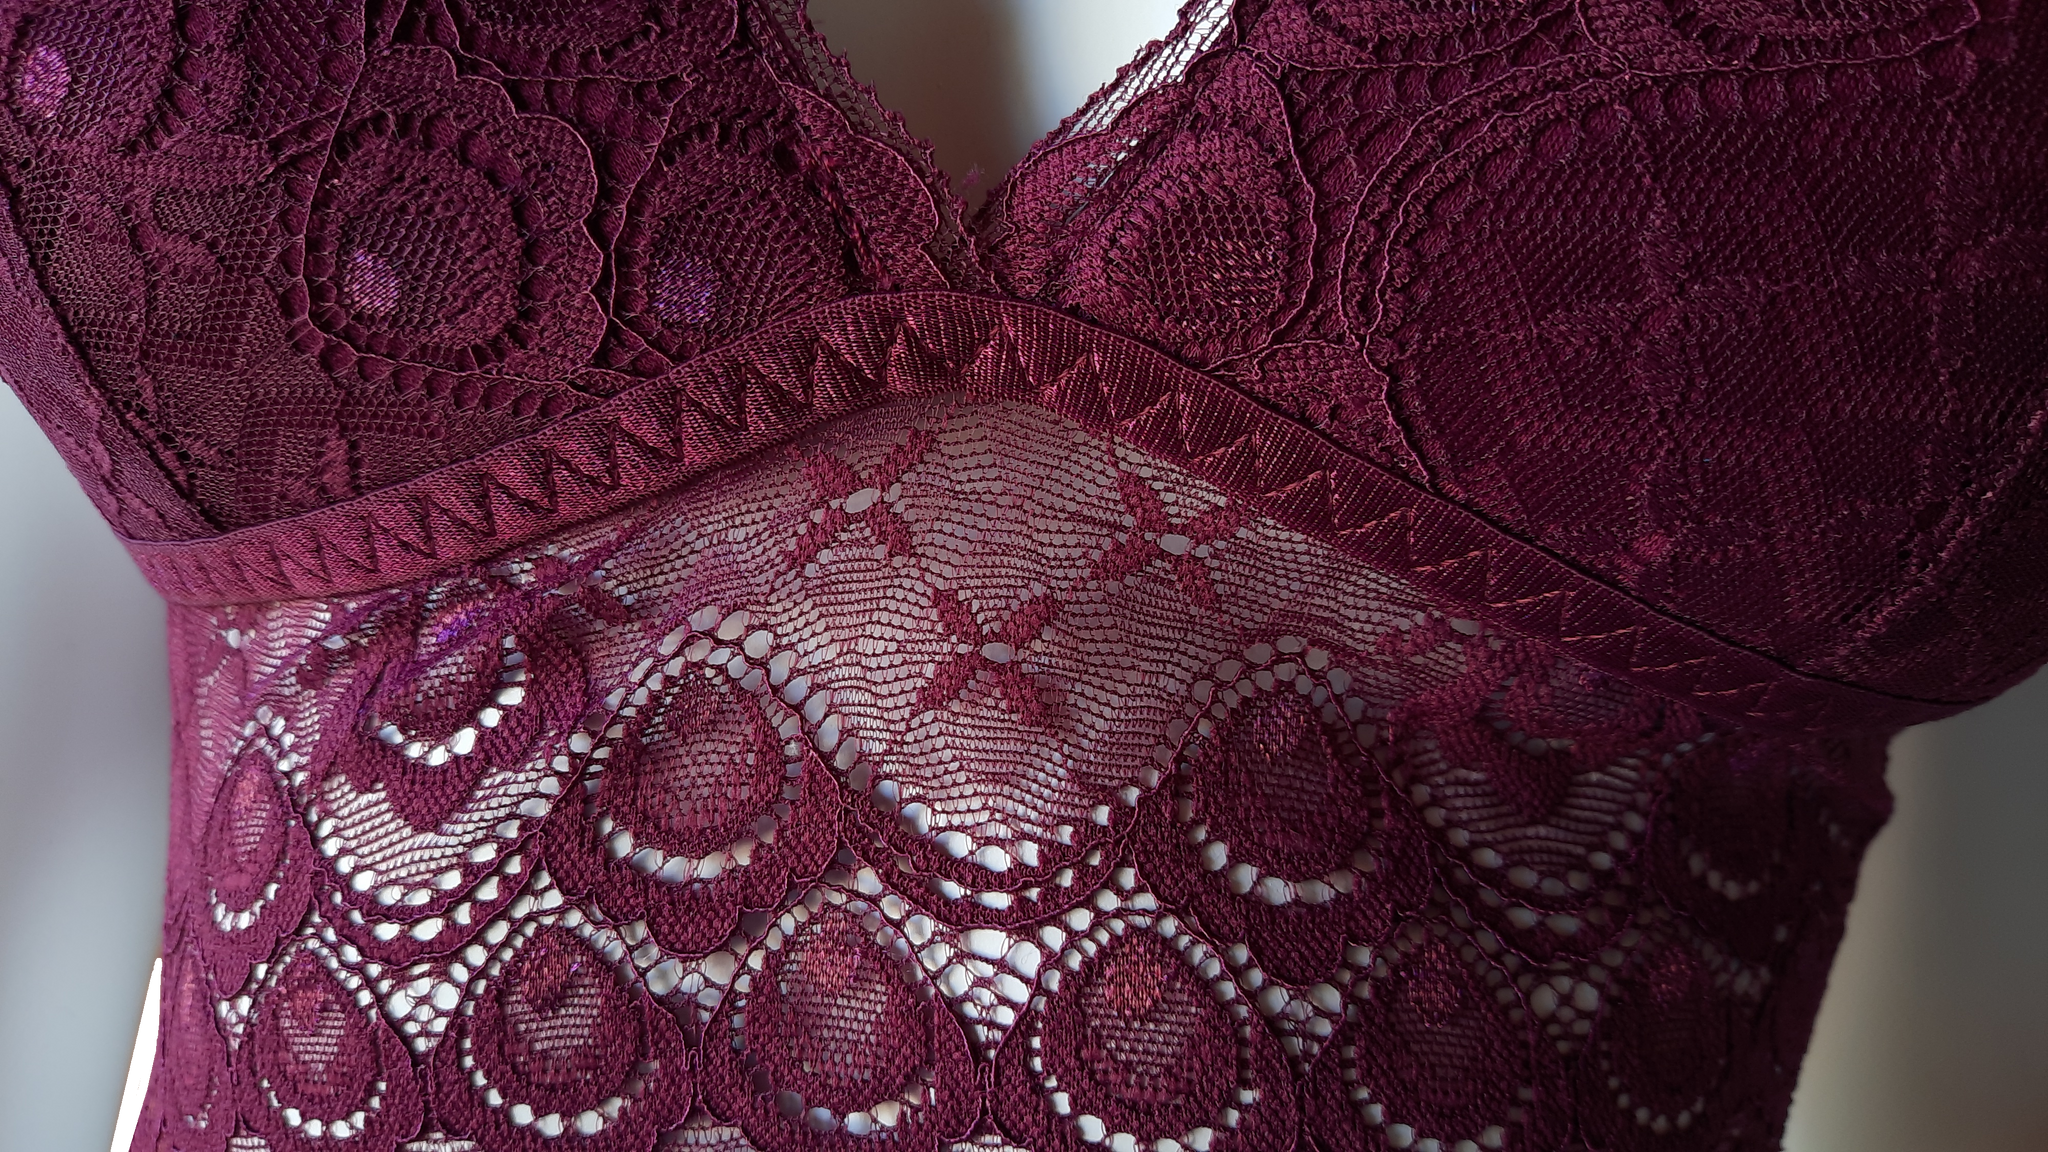 POGLIP Women's Red Deep V Lace Bralette Crop Top